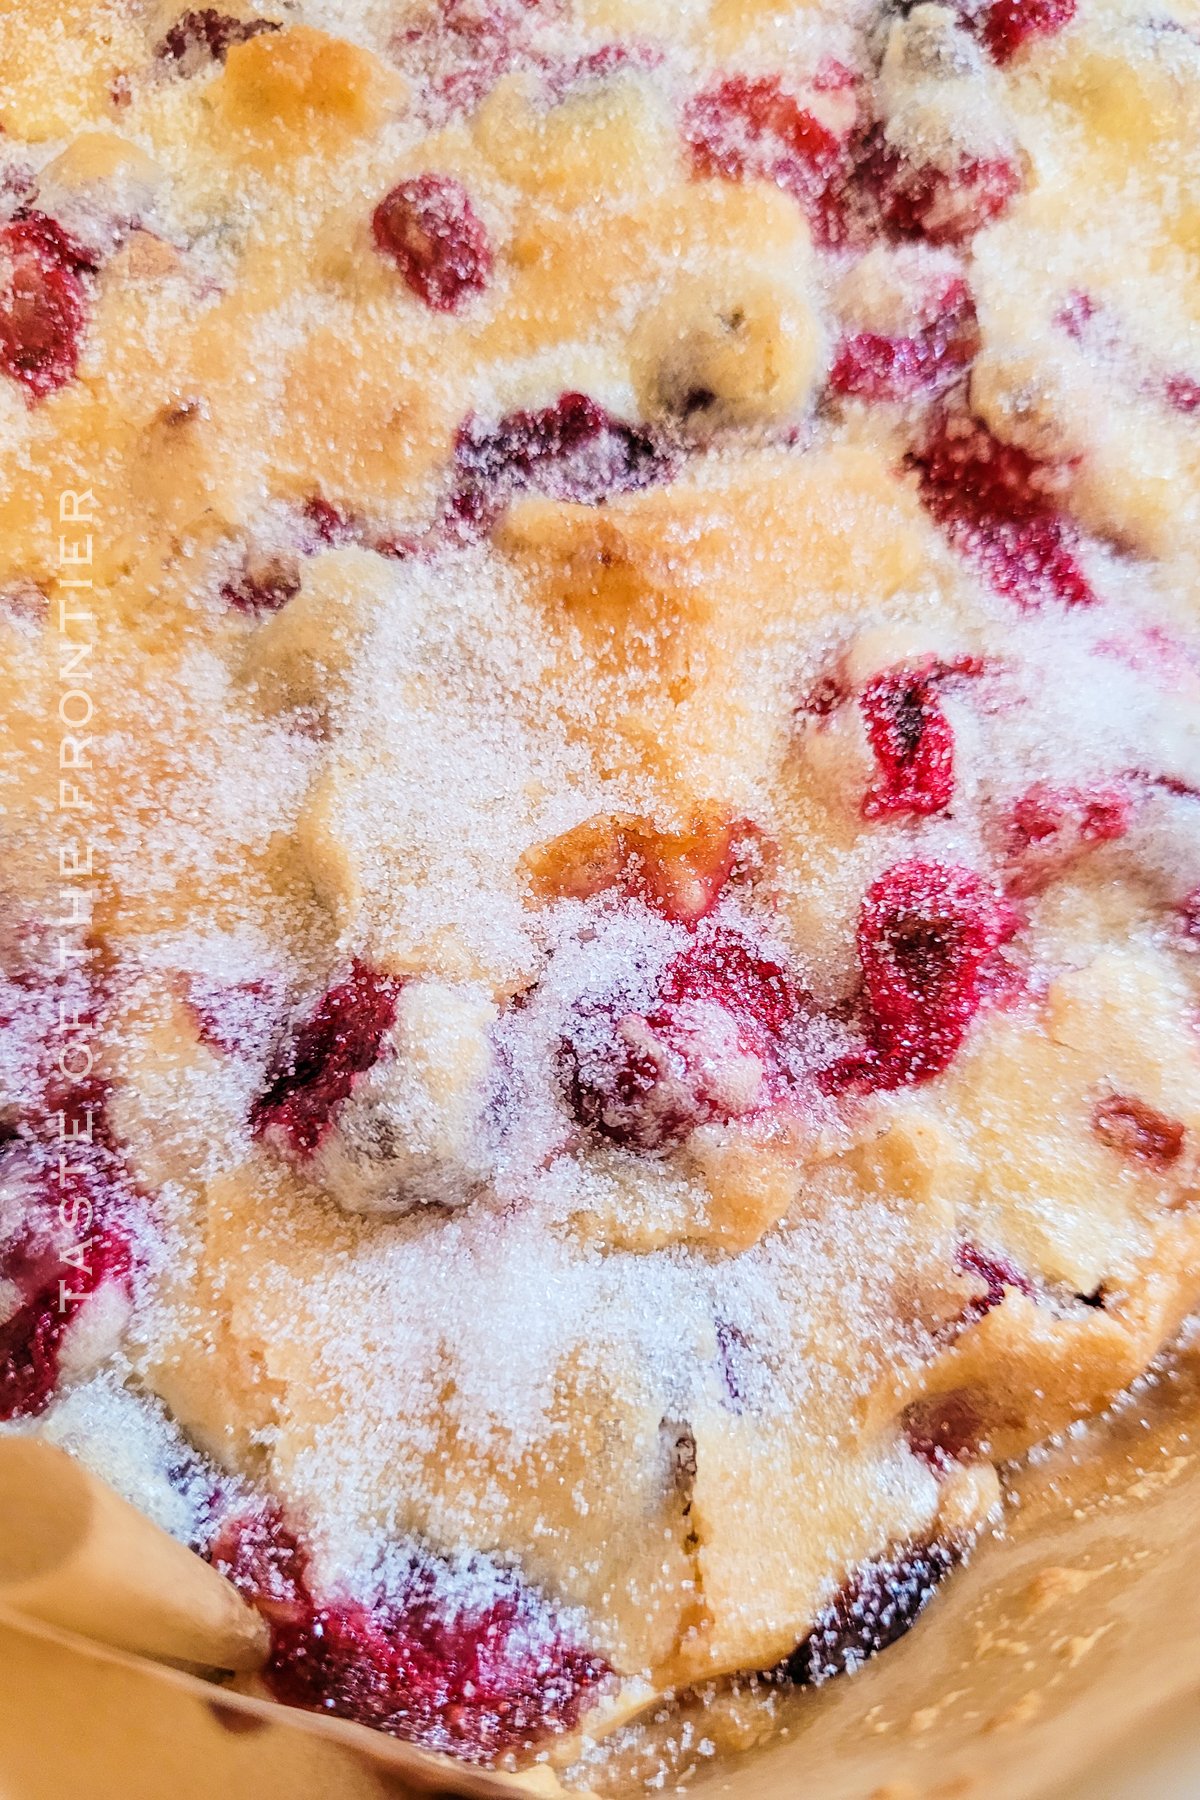 Thanksgiving dessert with cranberries